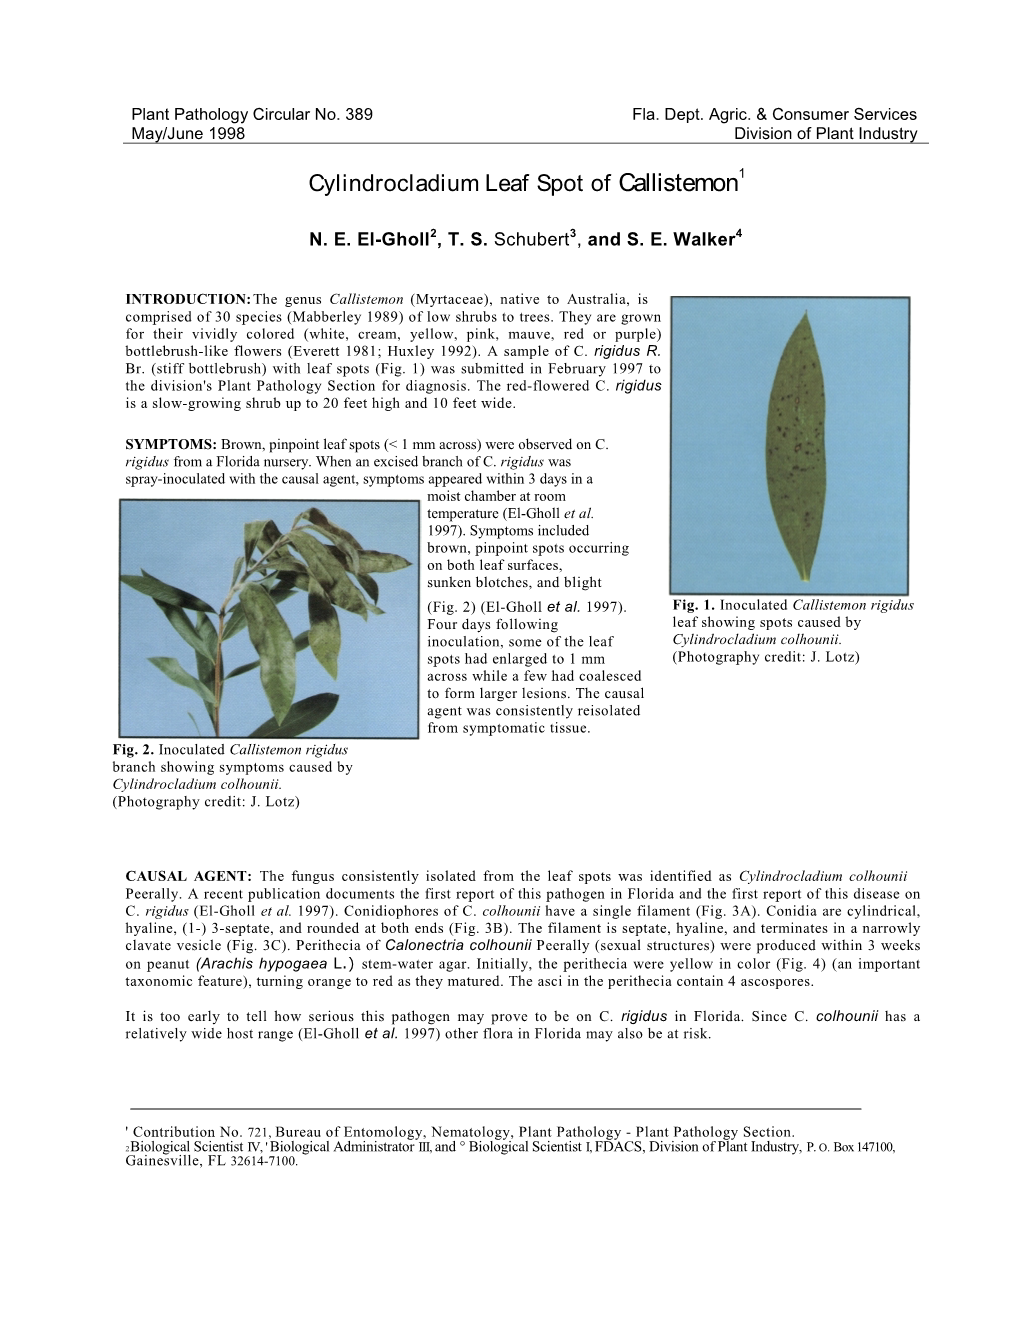 Cylindrocladium Leaf Spot of Callistemon1